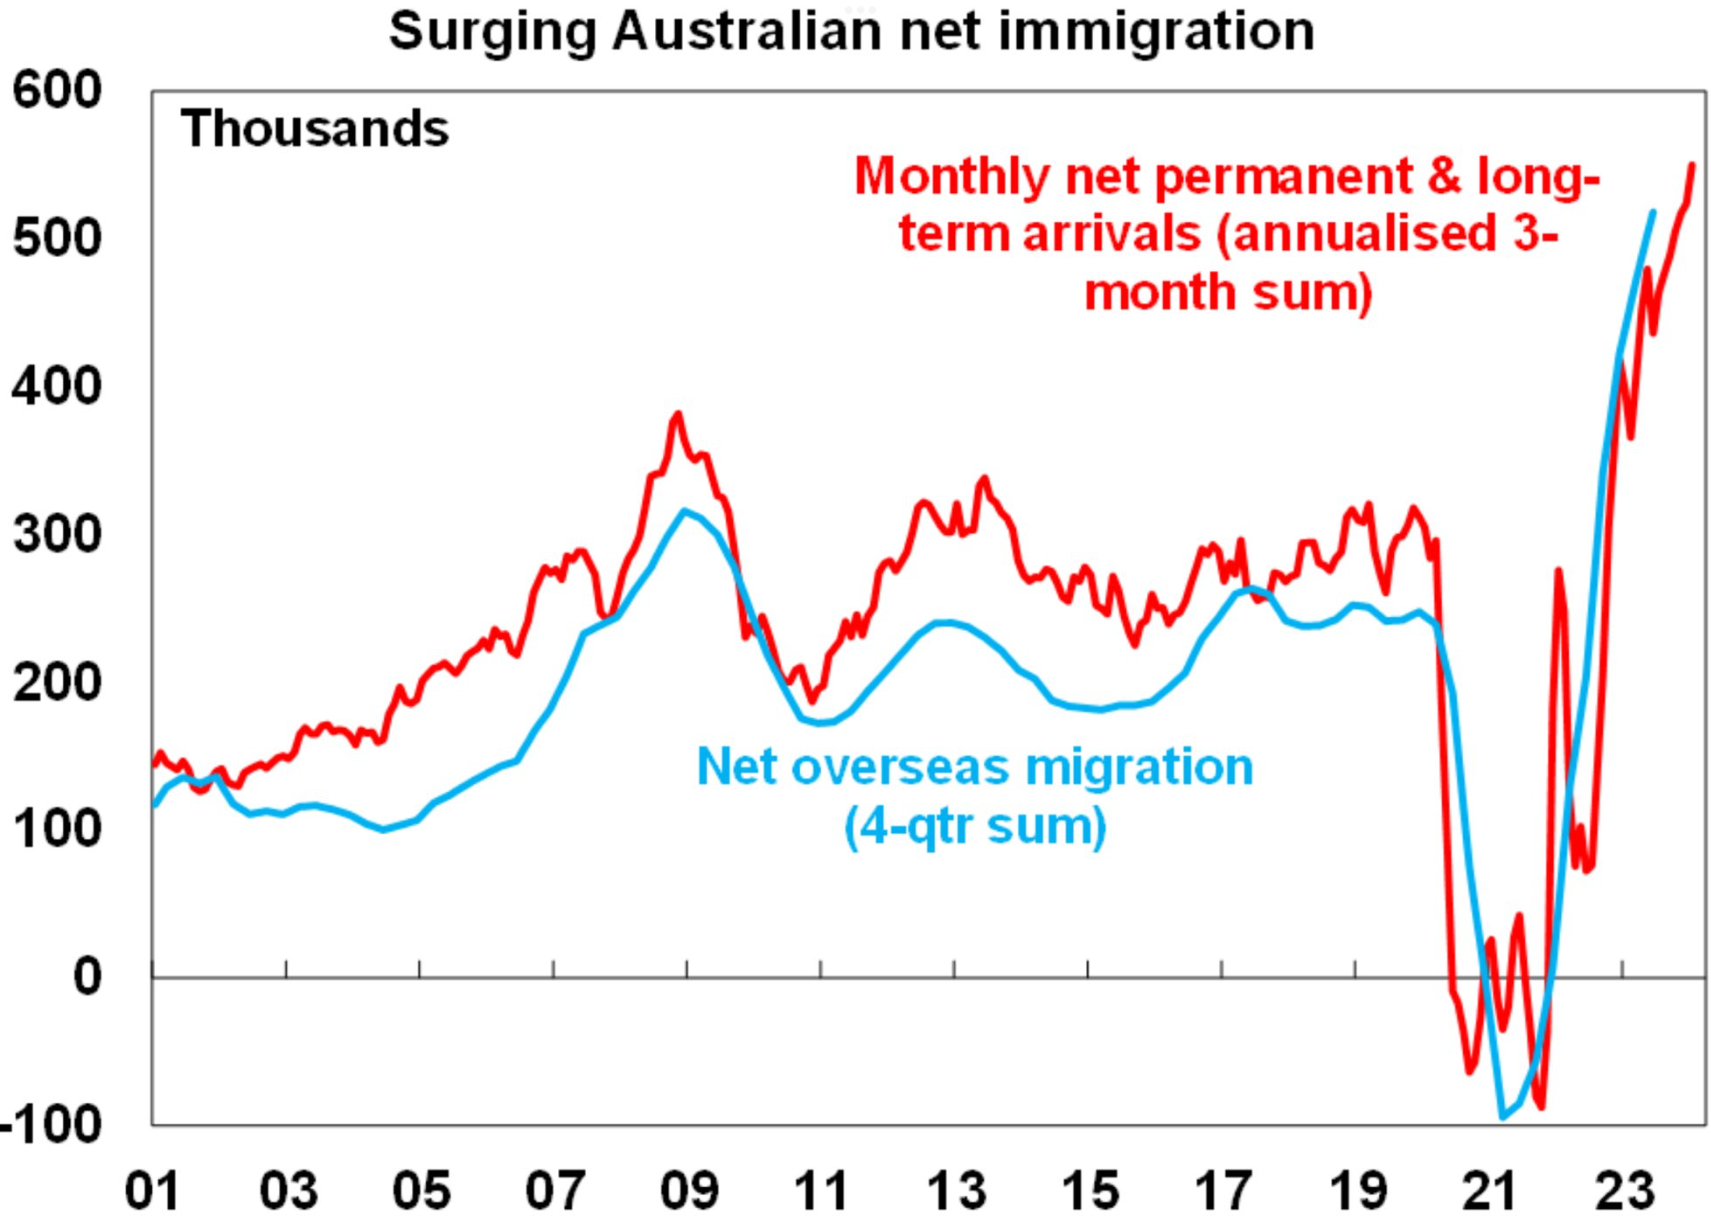 Surging net immigration